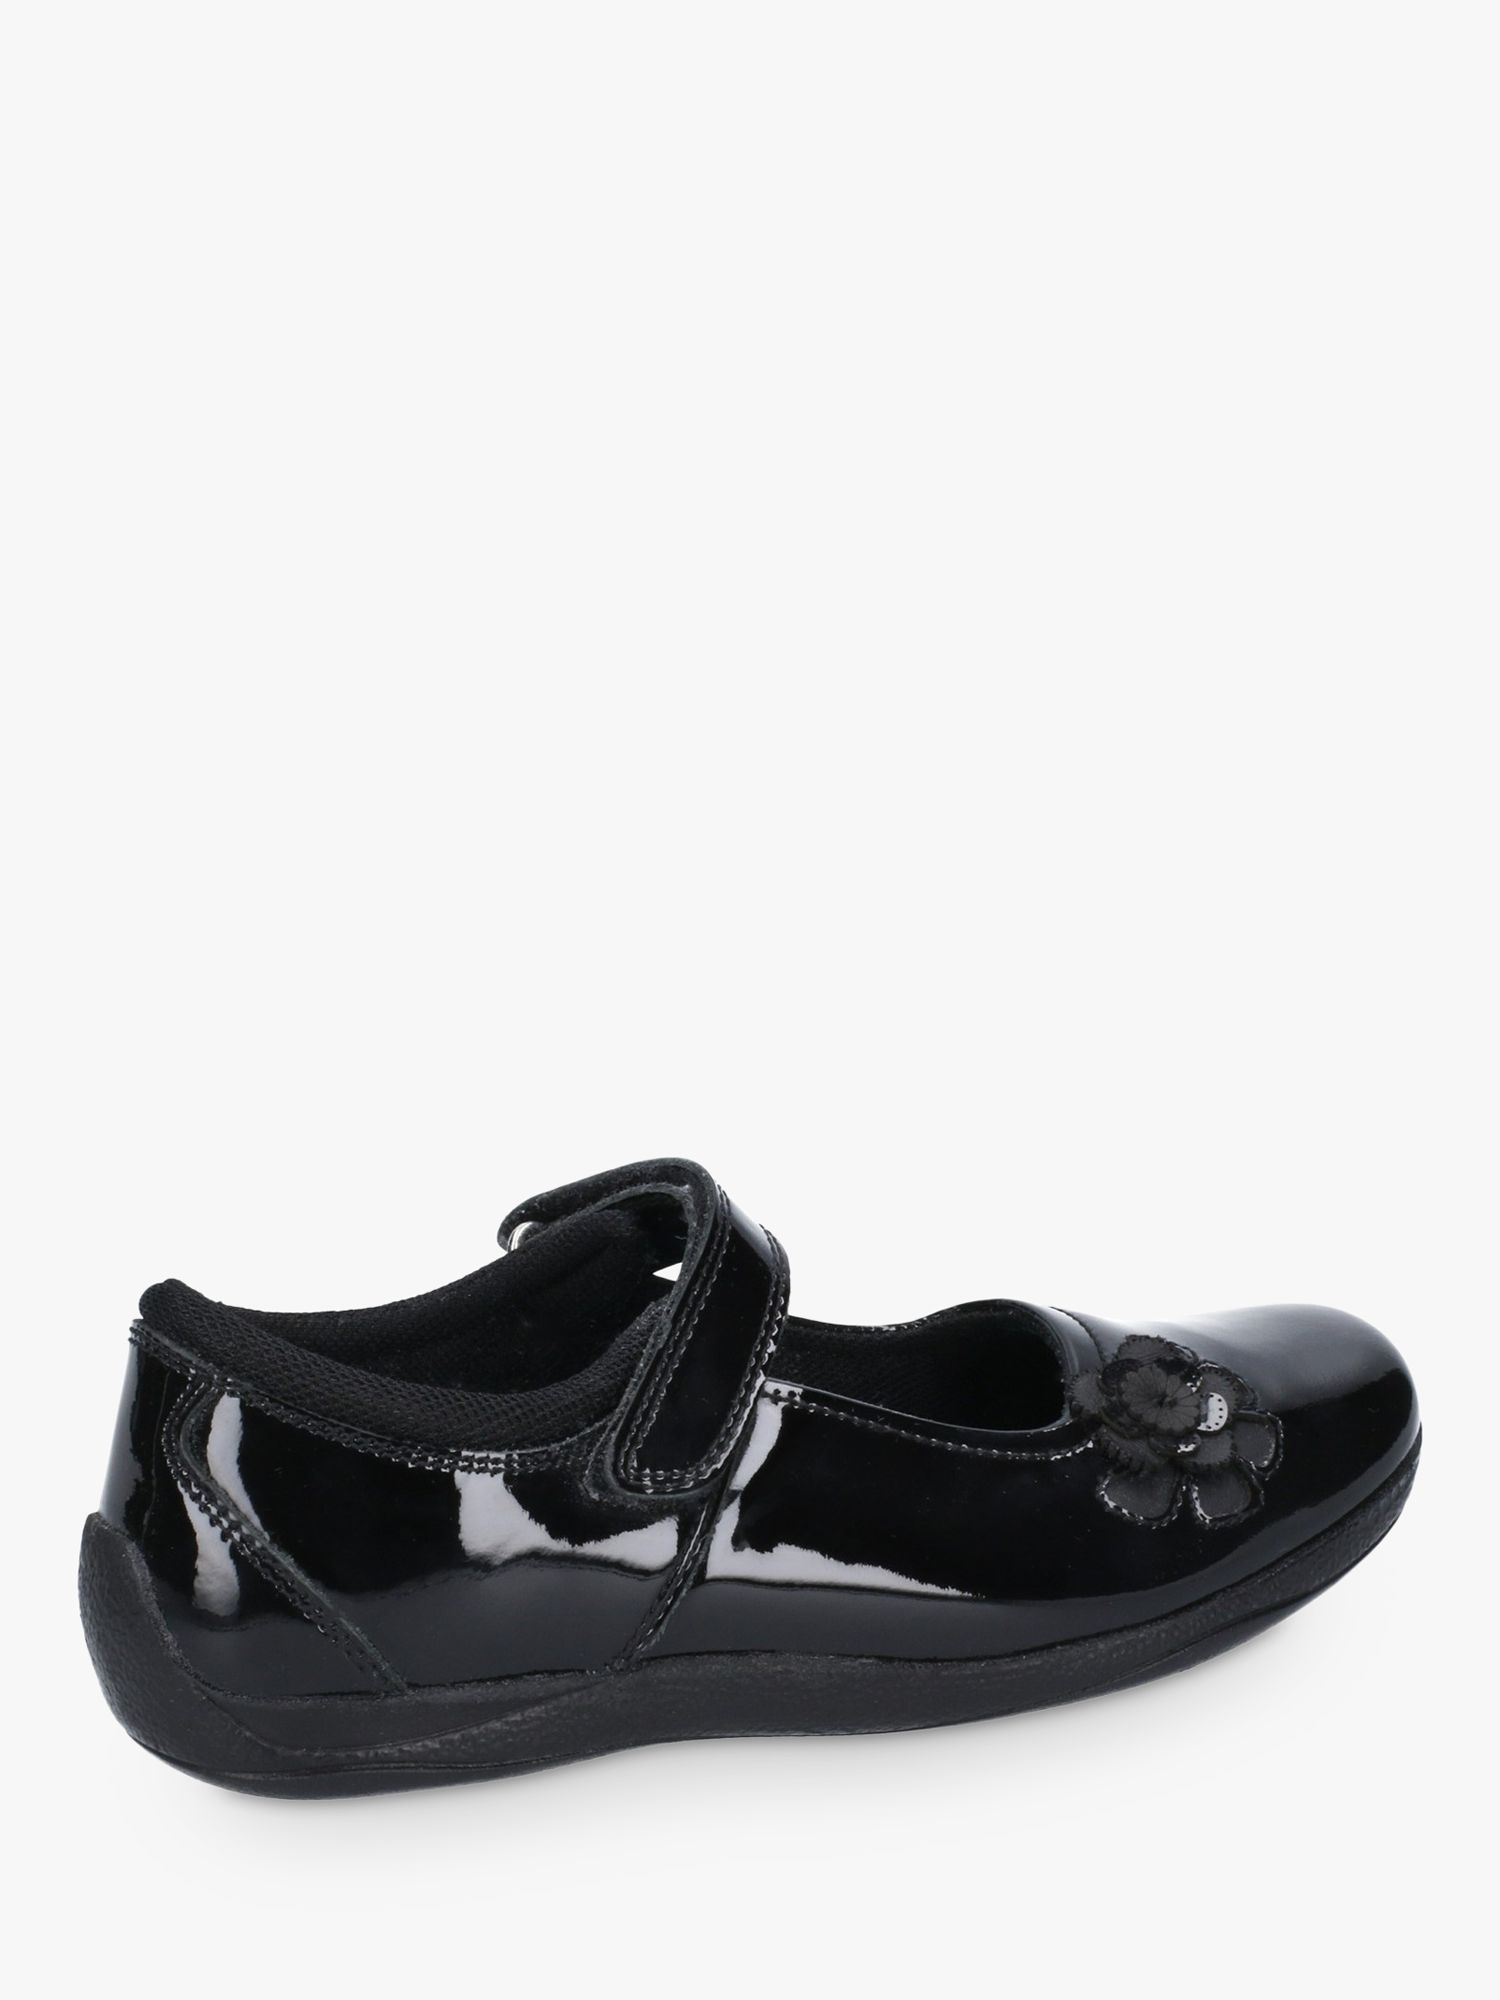 Hush Puppies Kids' Jessica Junior Patent Leather School Shoes, Black, 13.5 Jnr